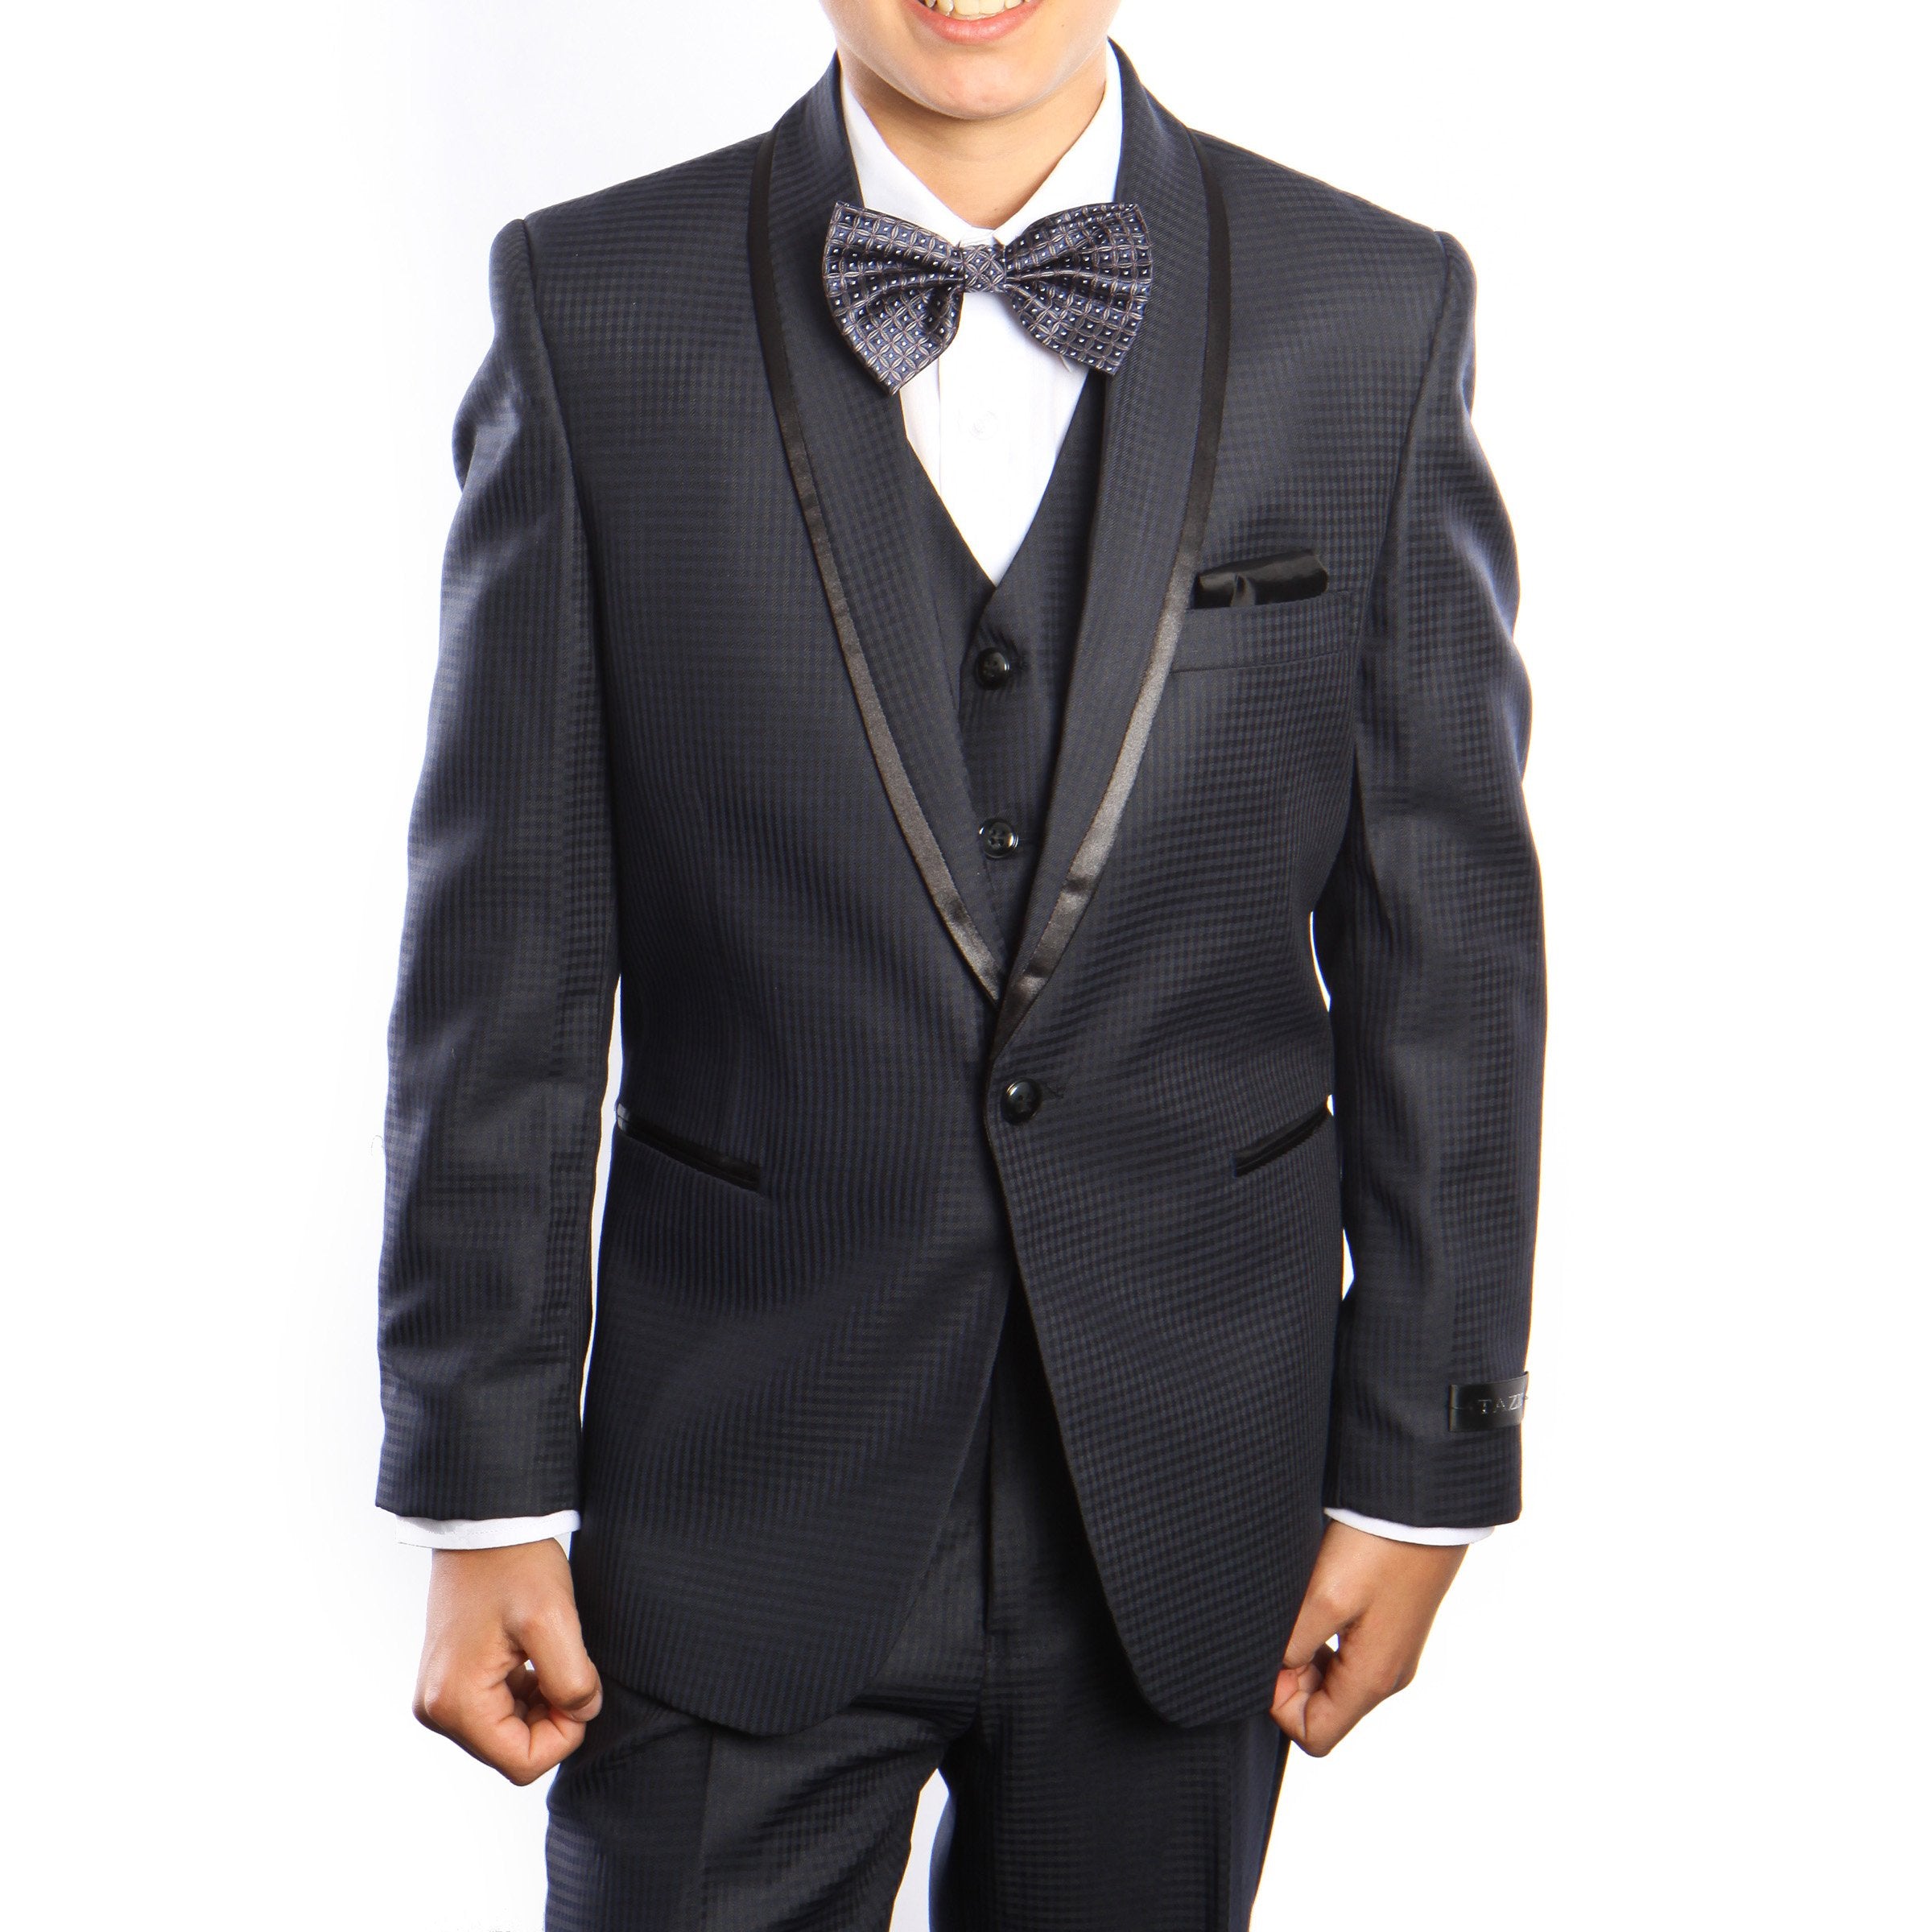 3-Piece Solid Shawl Lapel Suit Suits For Boy's